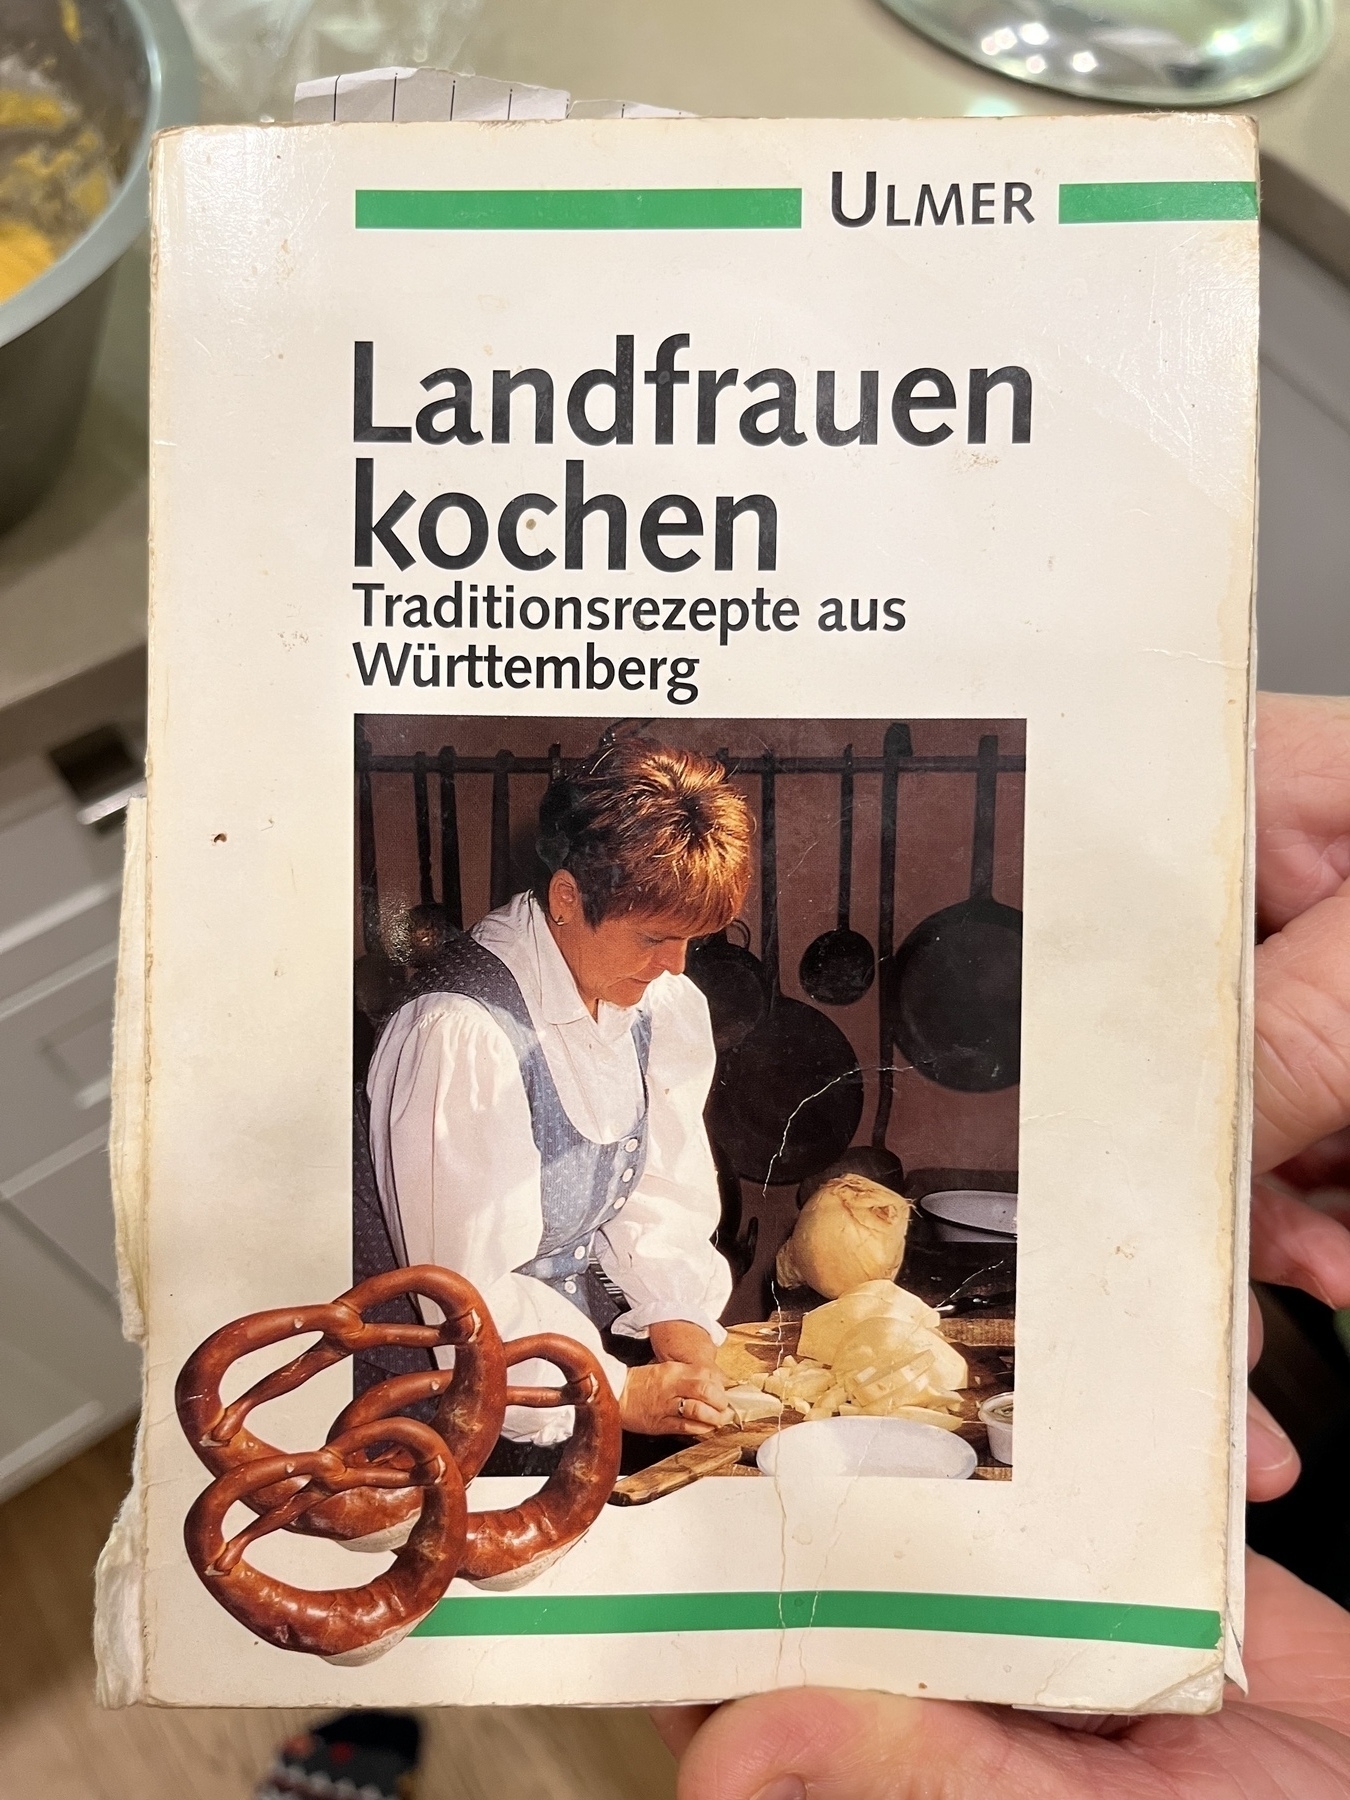 German cookbook titled “Landfrauen kochen - Traditionsrezepte aus Württemberg”&10;&10;A woman cooking with some pretzels pictured. 